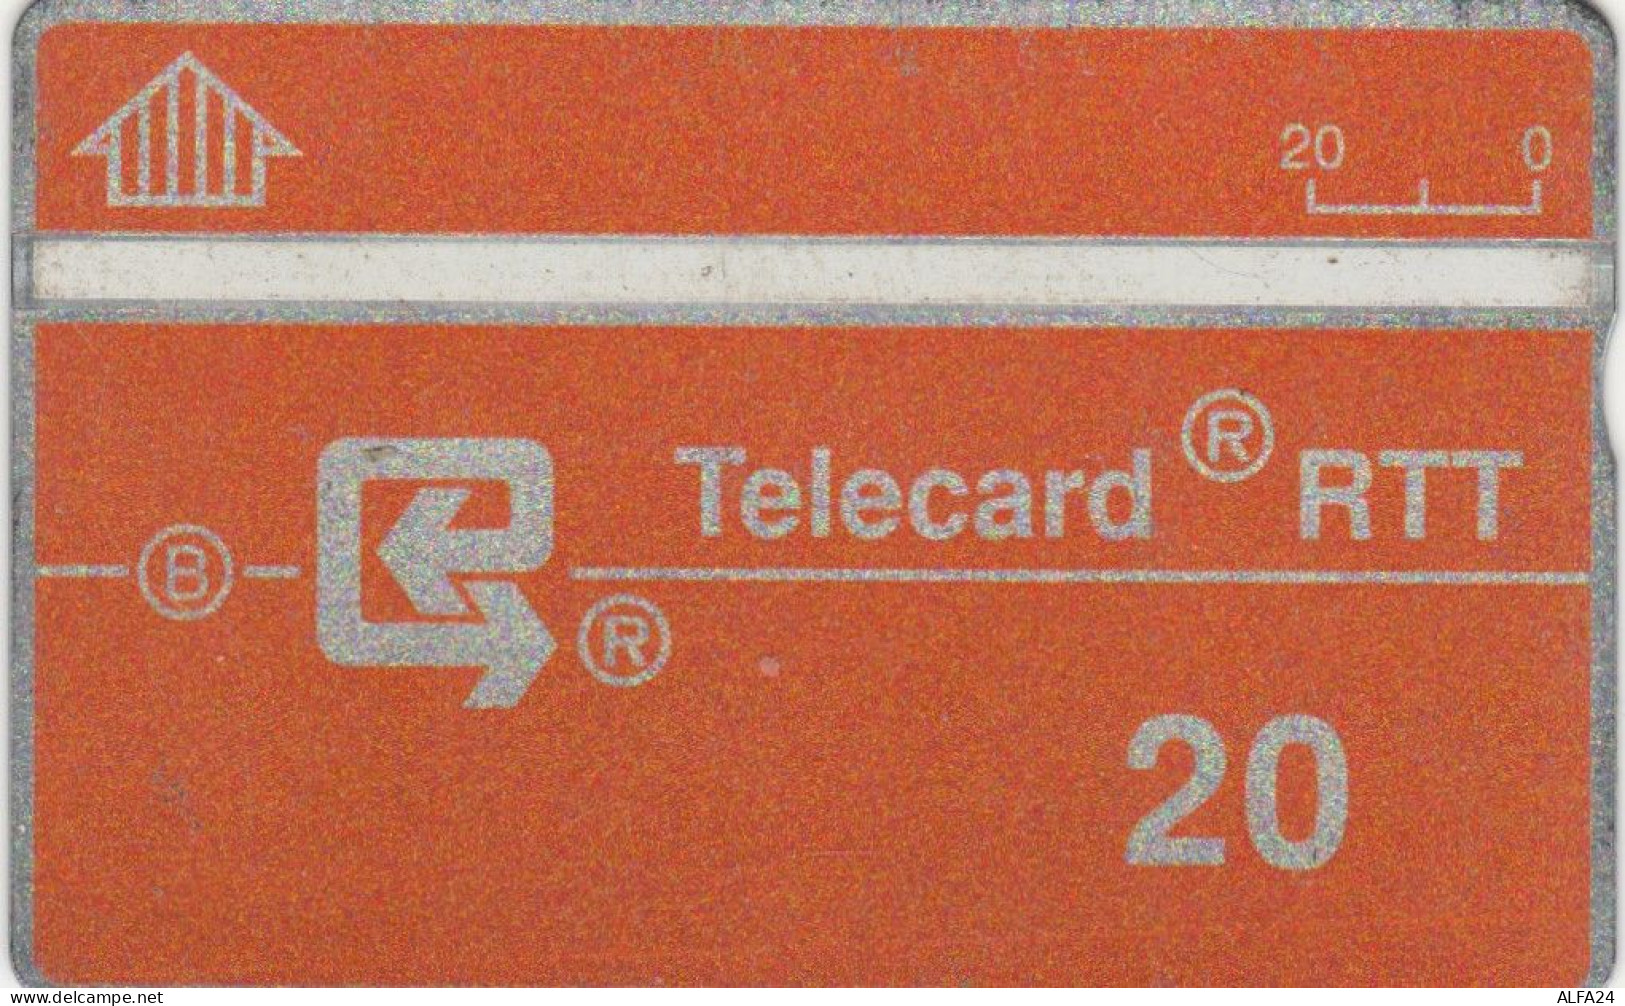 PHONE CARD BELGIO 20 (E66.8.8 - Ohne Chip